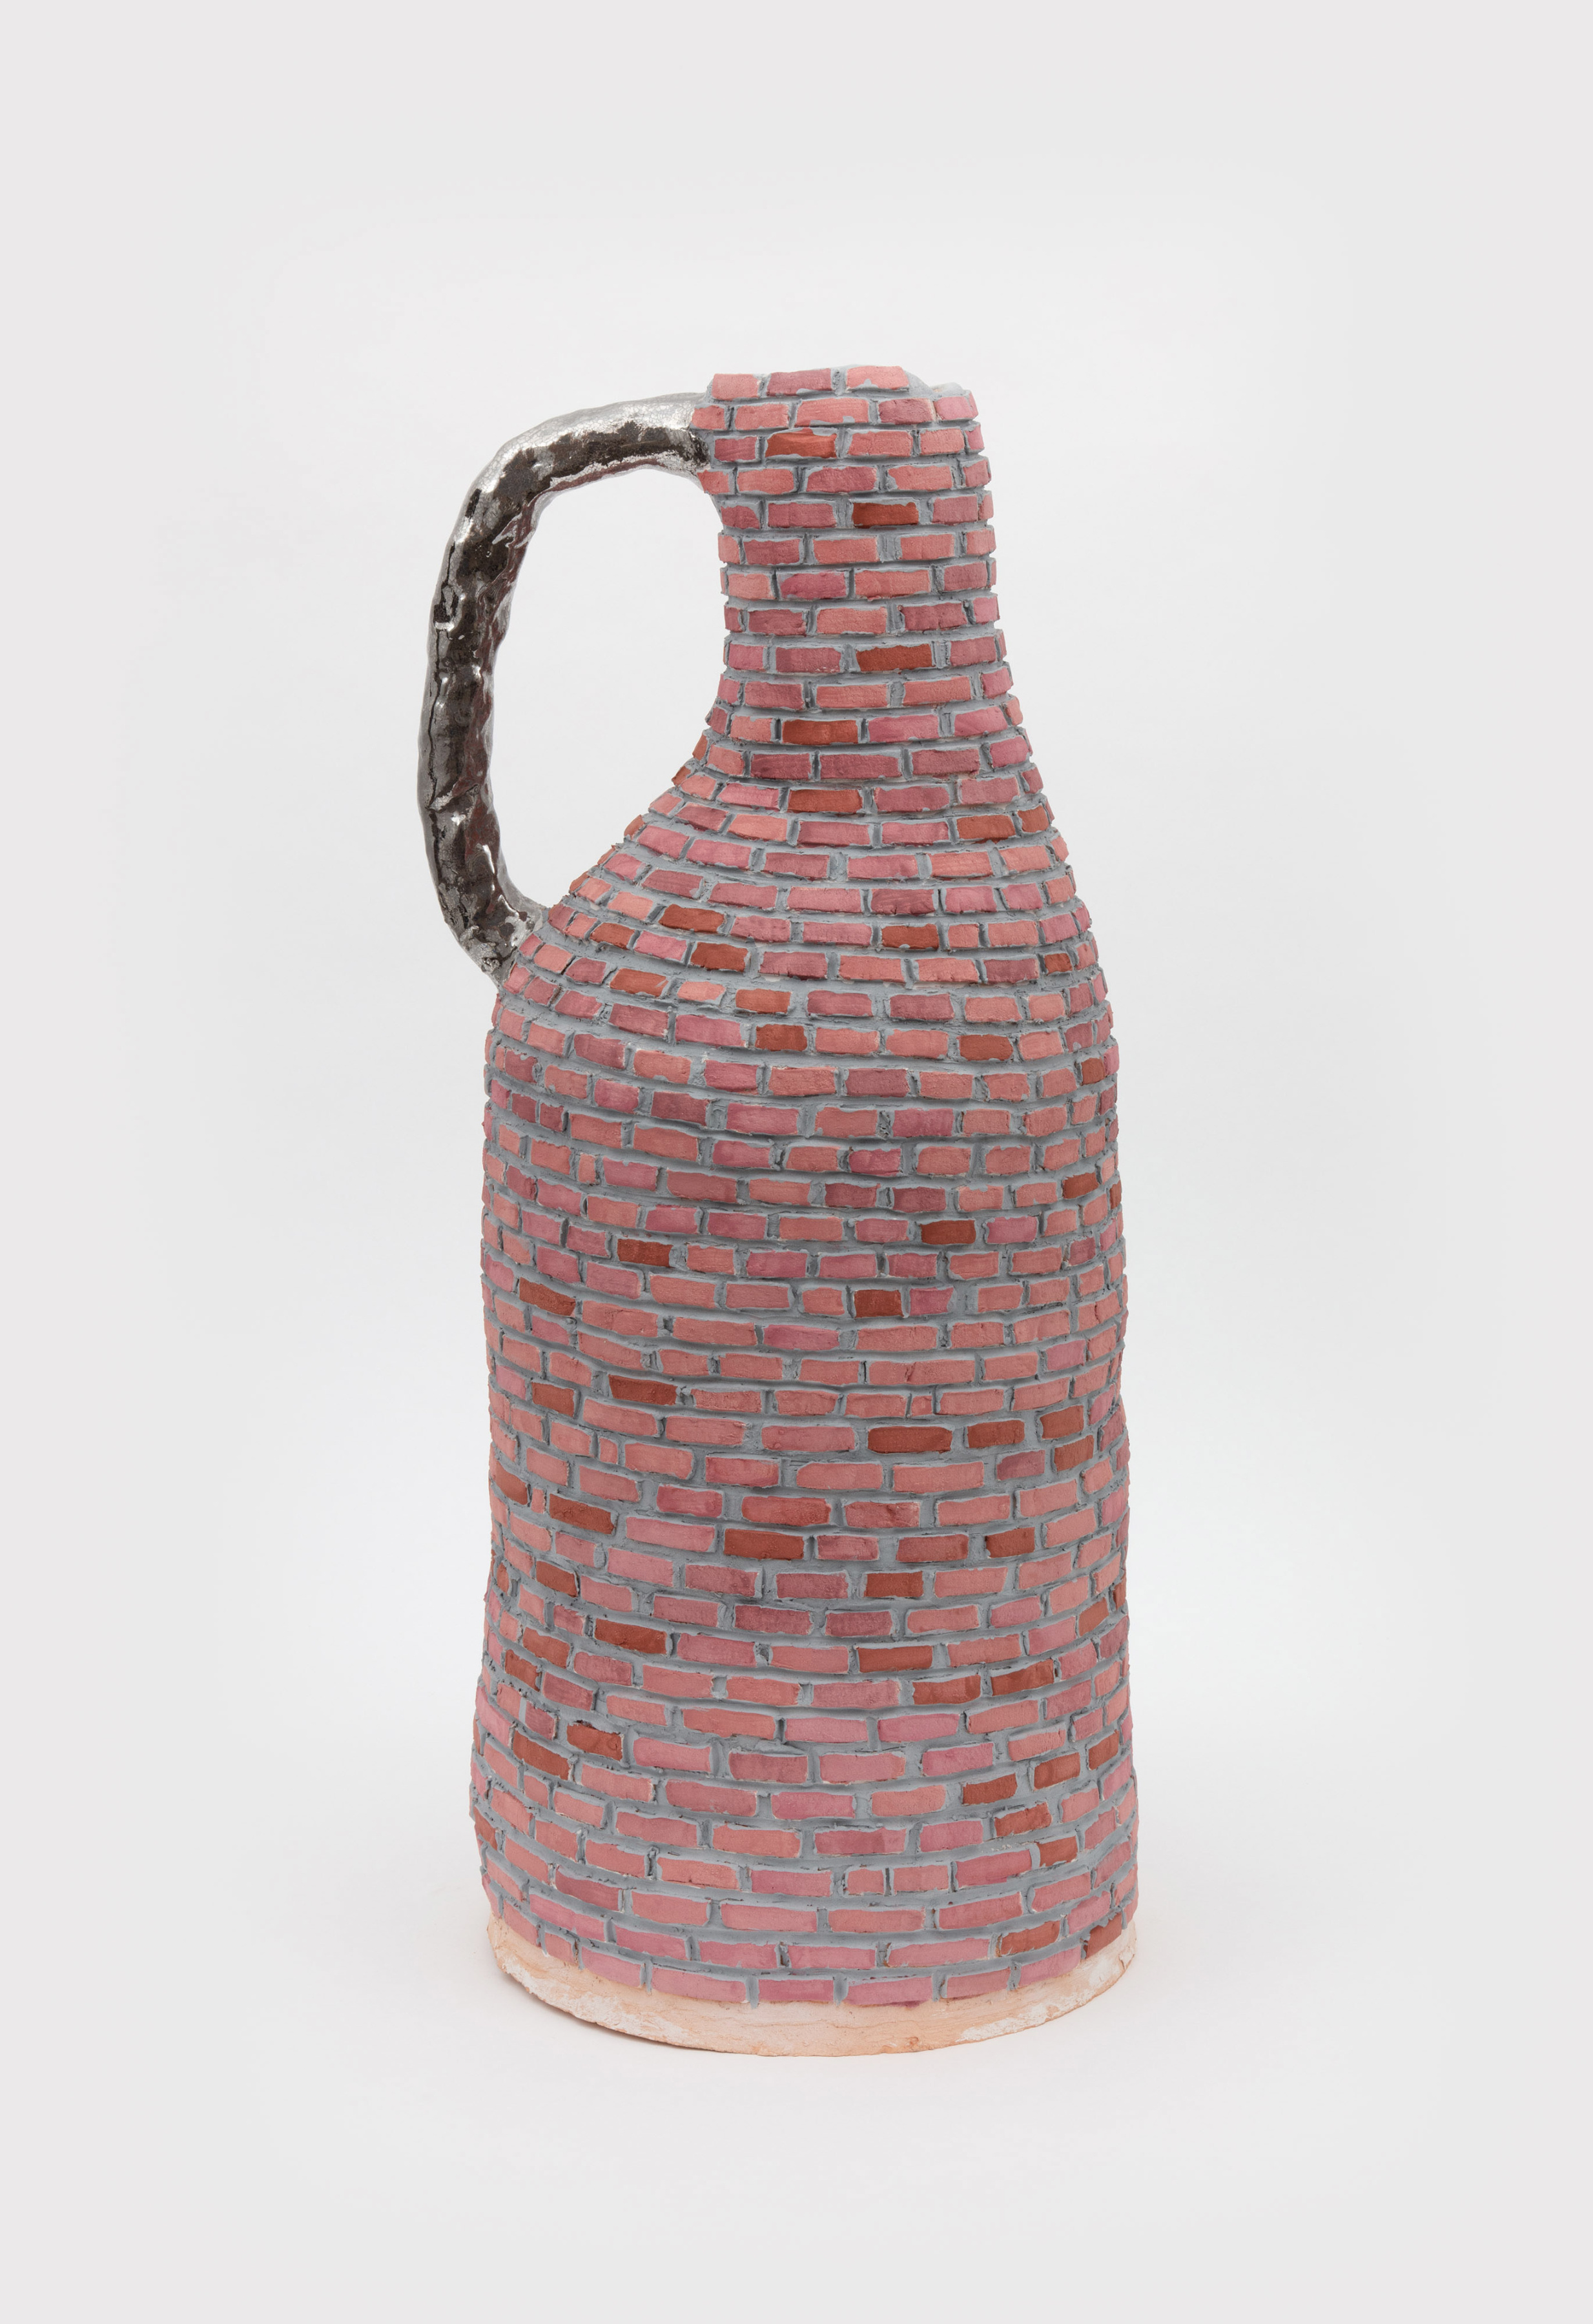 Grant Levy-Lucero, Brick and Mortar, ceramic artwork